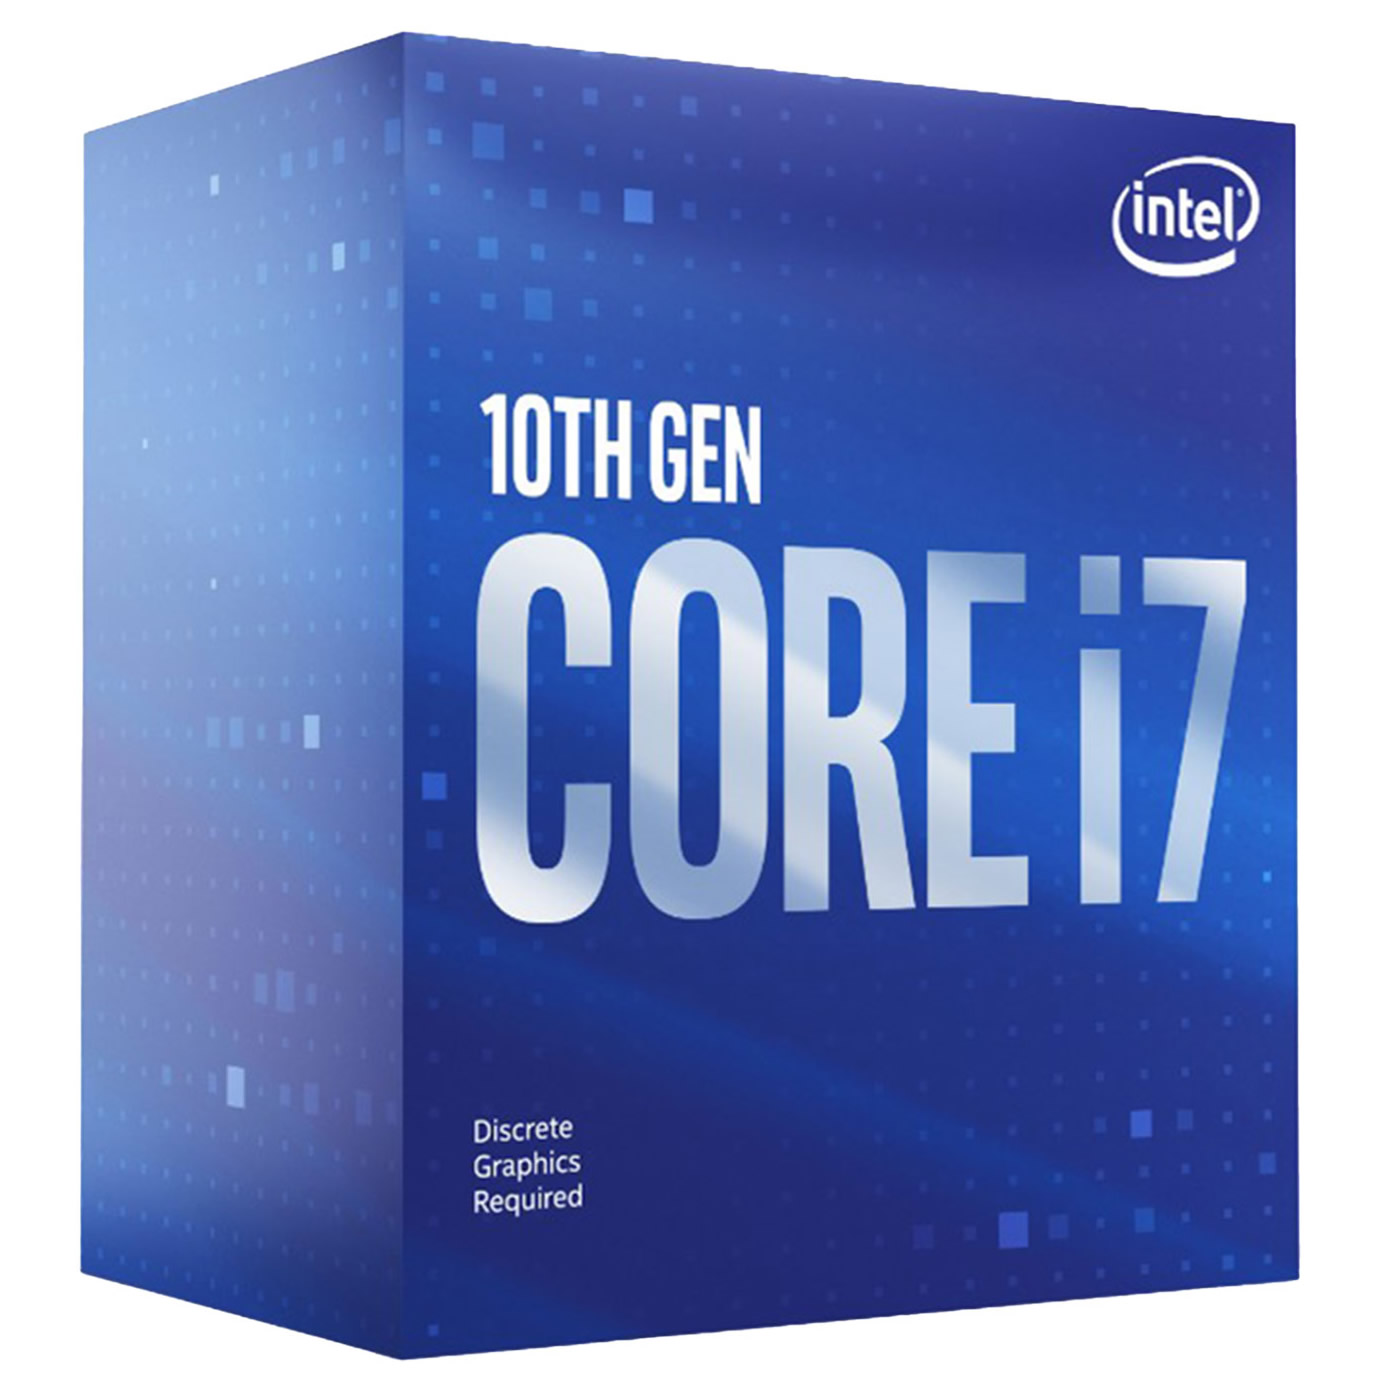 Intel - Intel Core i7-10700 2.9GHz (Comet Lake) Socket LGA1200 Processor - Retail